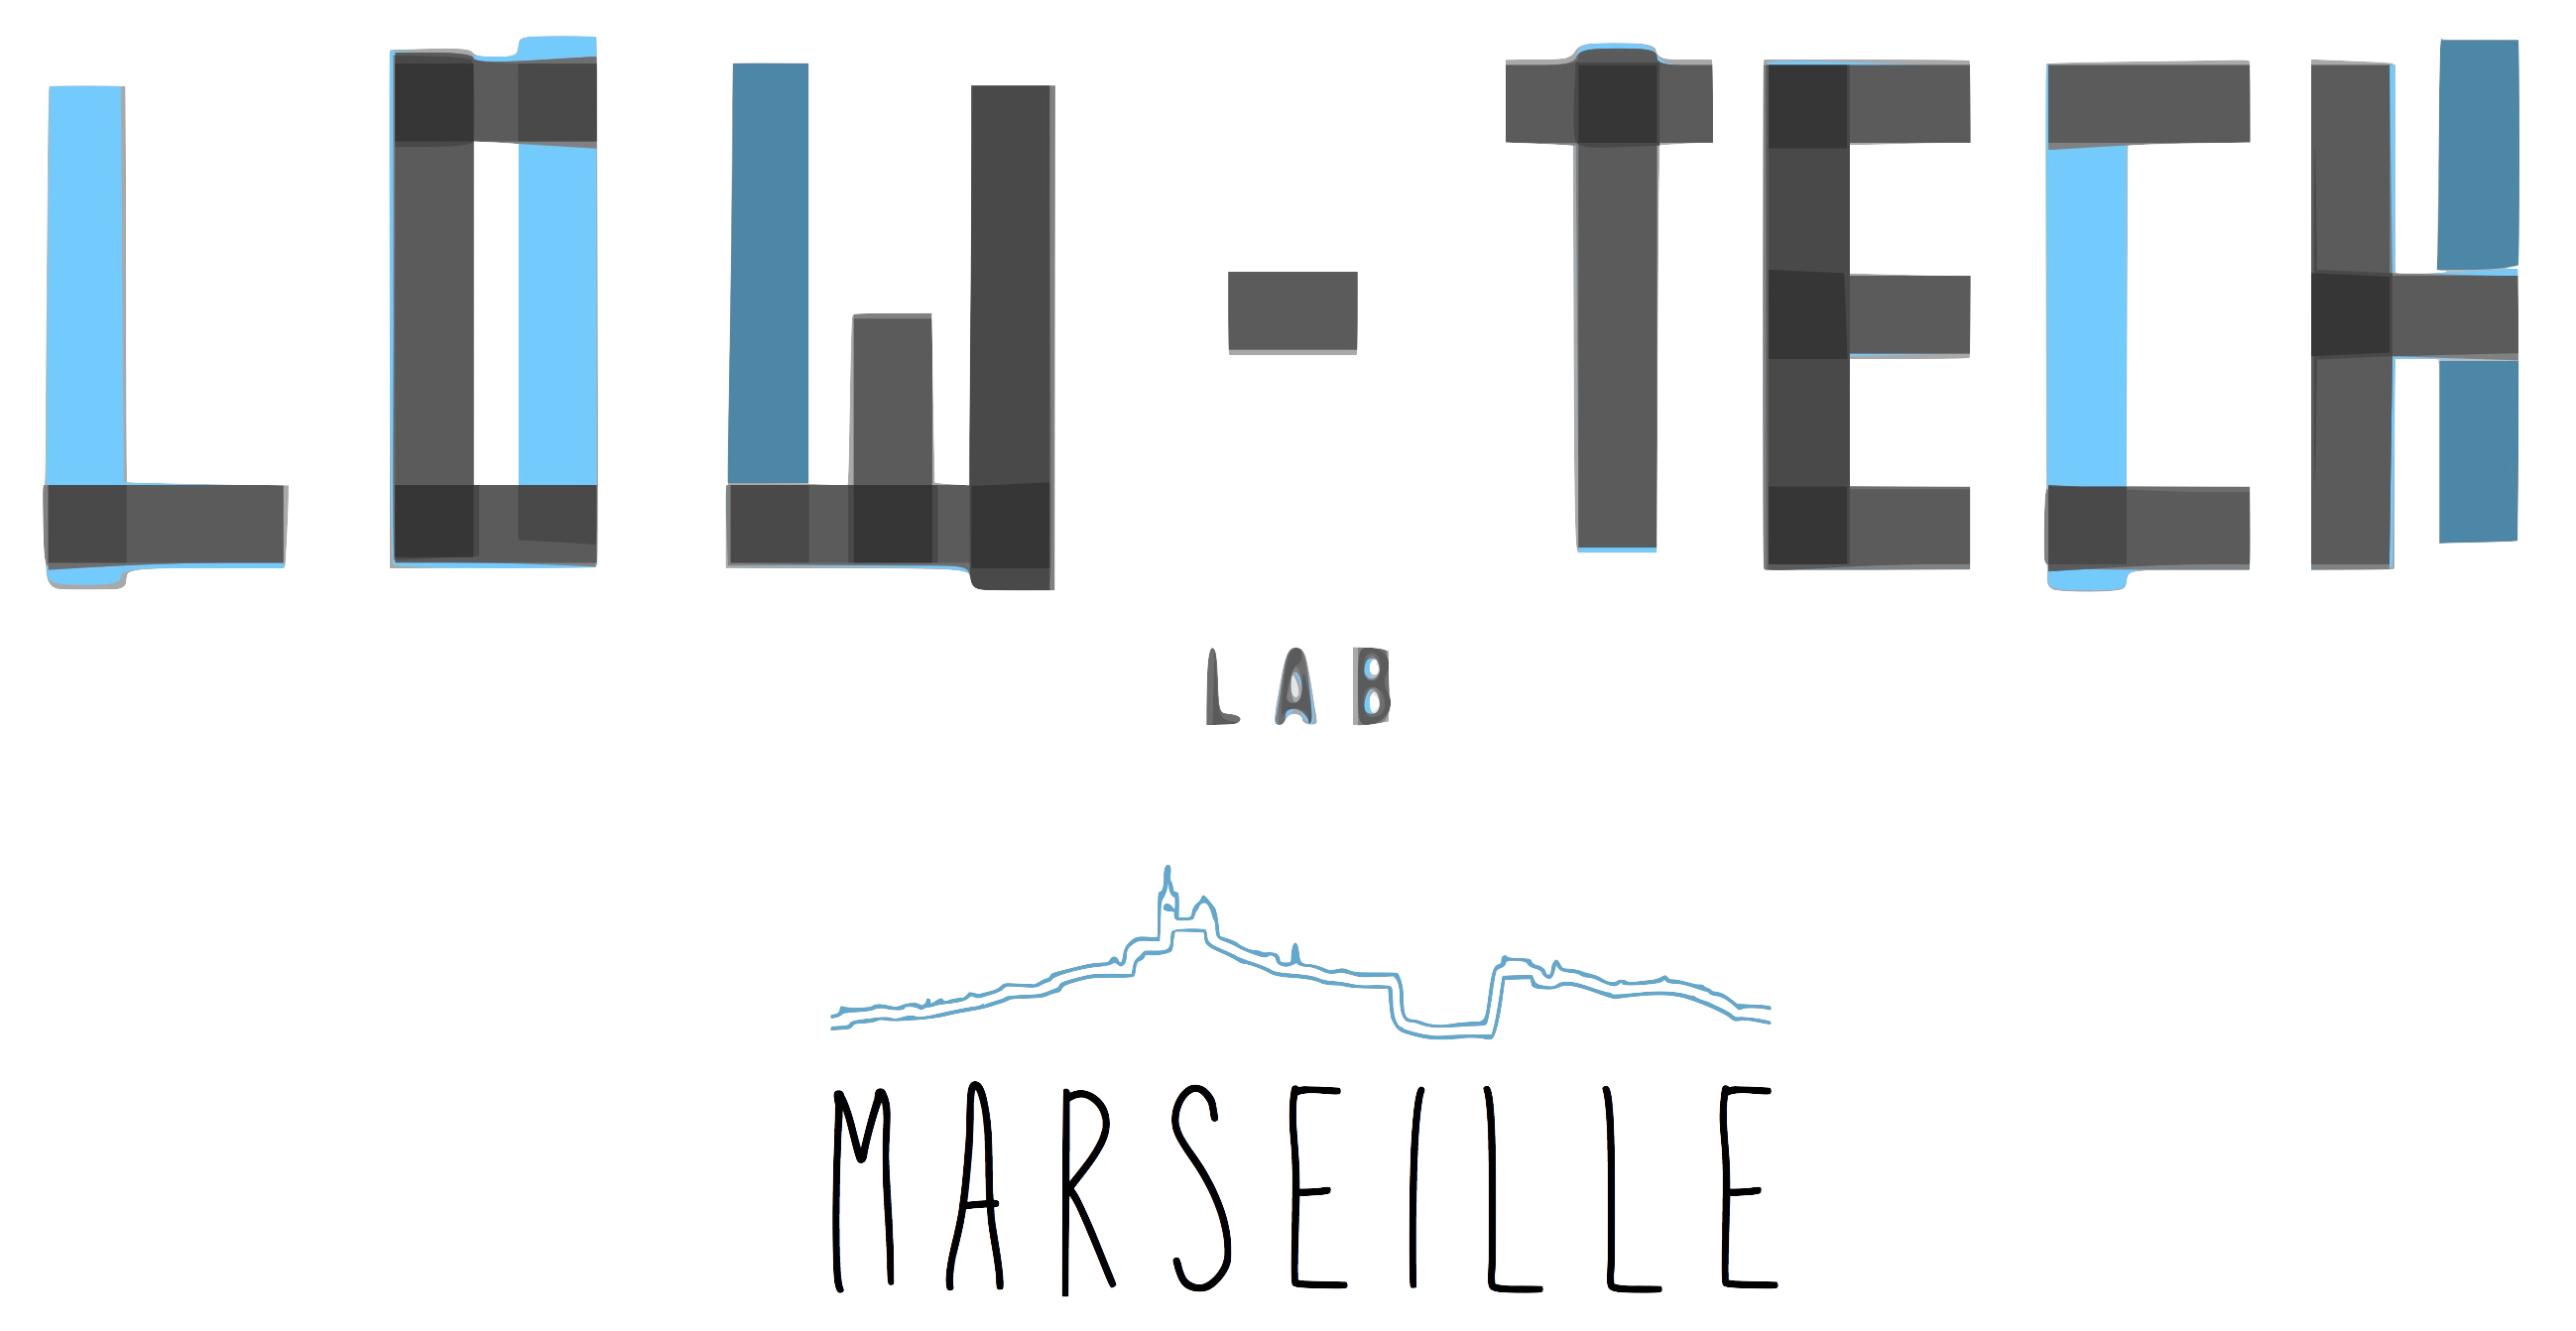 Group-Low-tech Lab Marseille logo Lowtech-lab-marseille h.png